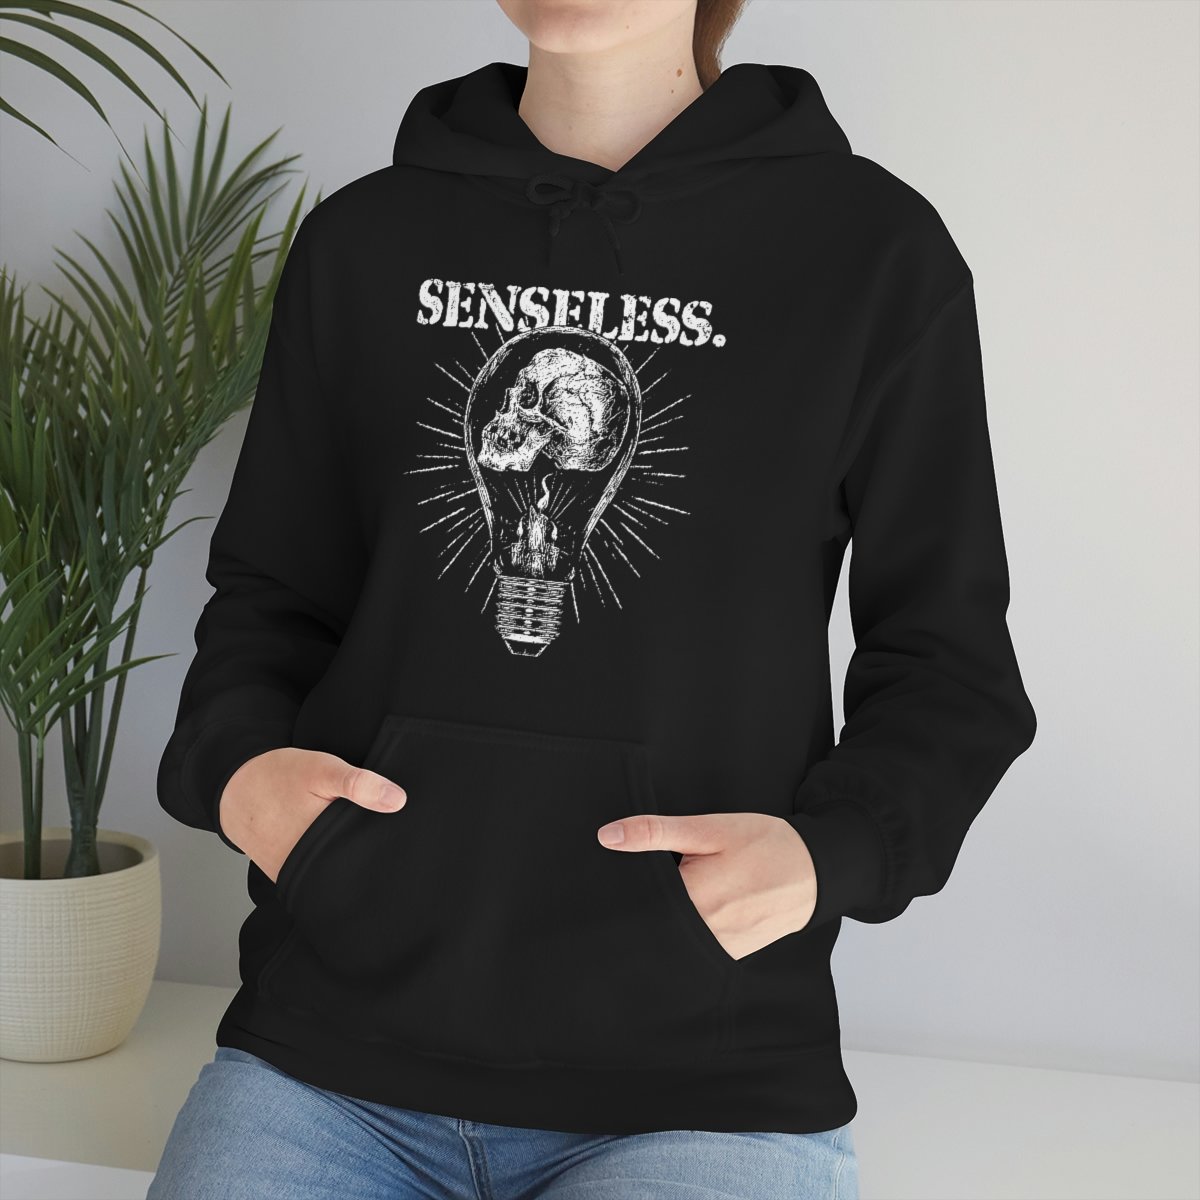 Senseless (TPR) Pullover Hooded Sweatshirt